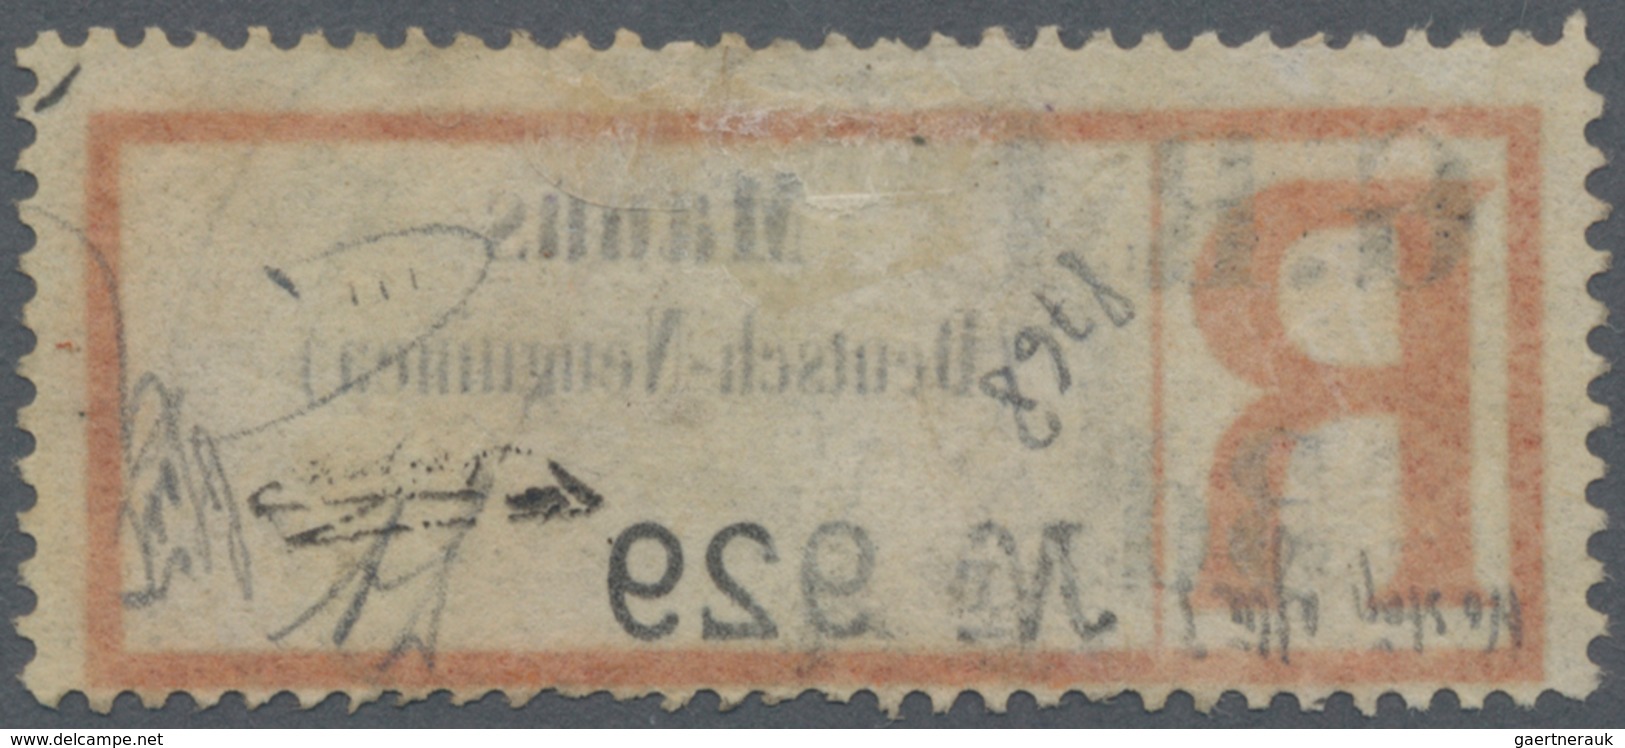 Deutsch-Neuguinea - Britische Besetzung: 1916, Einschreibzettel "Manus | (Deutsch-Neuguinea) | No 92 - Duits-Nieuw-Guinea